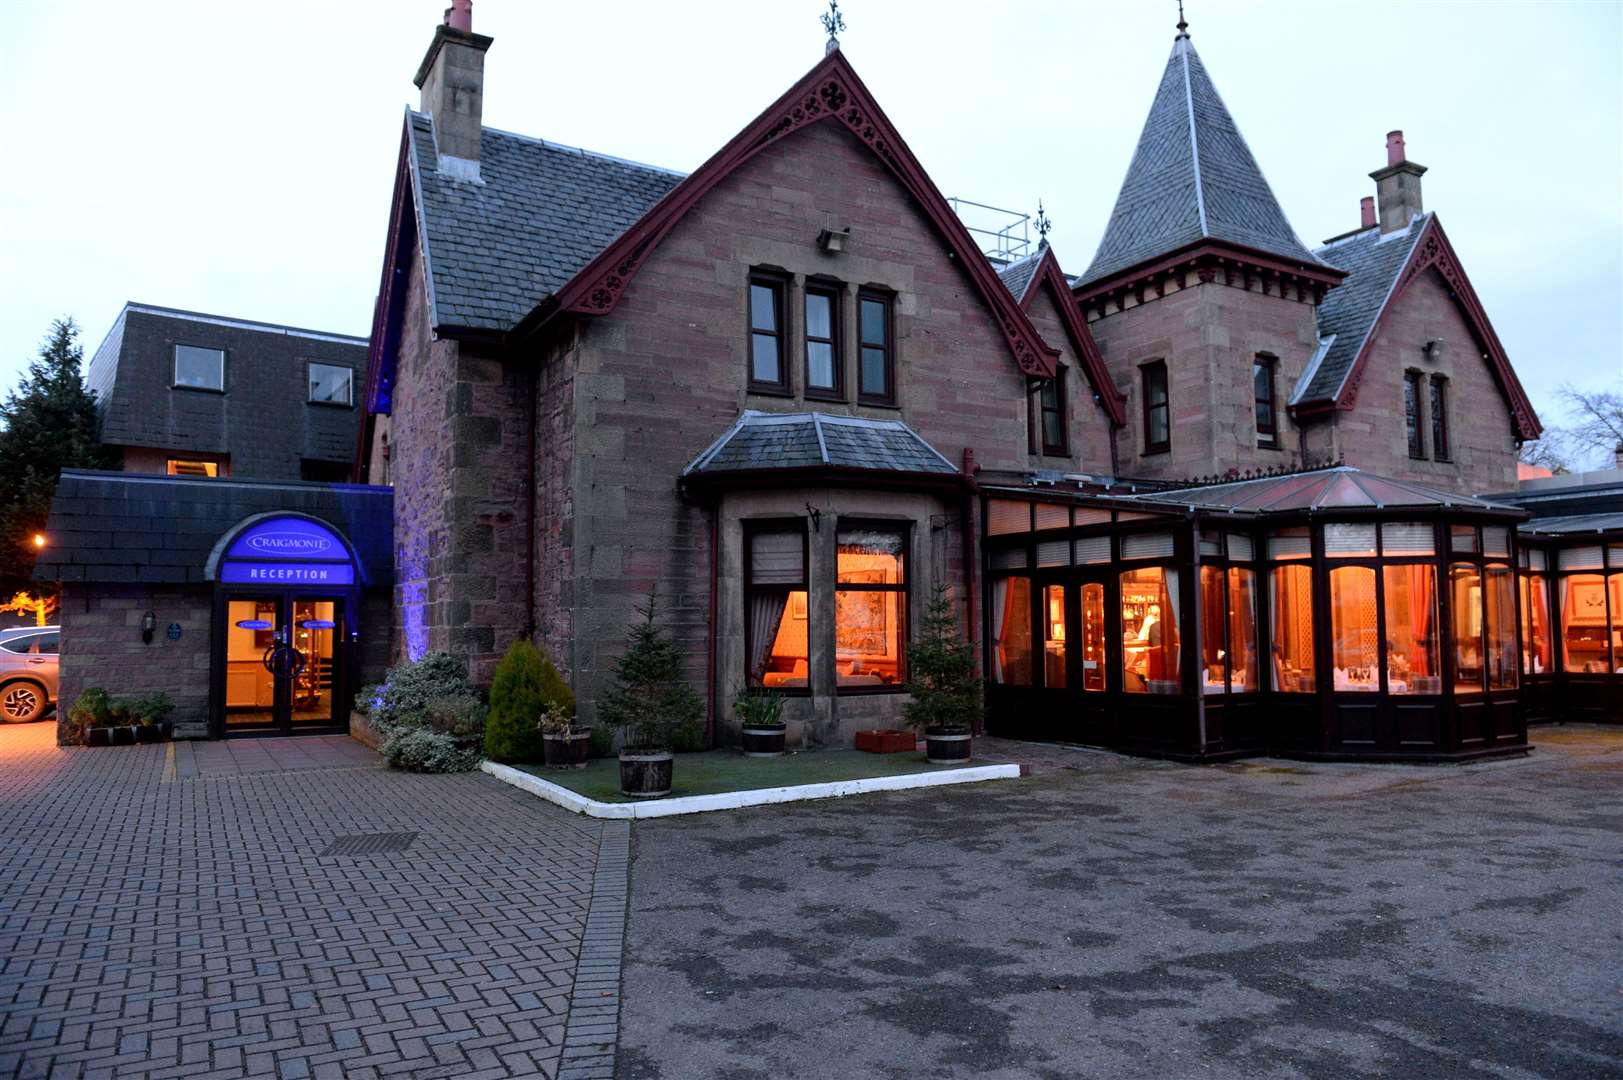 The Craigmonie Hotel in Inverness.